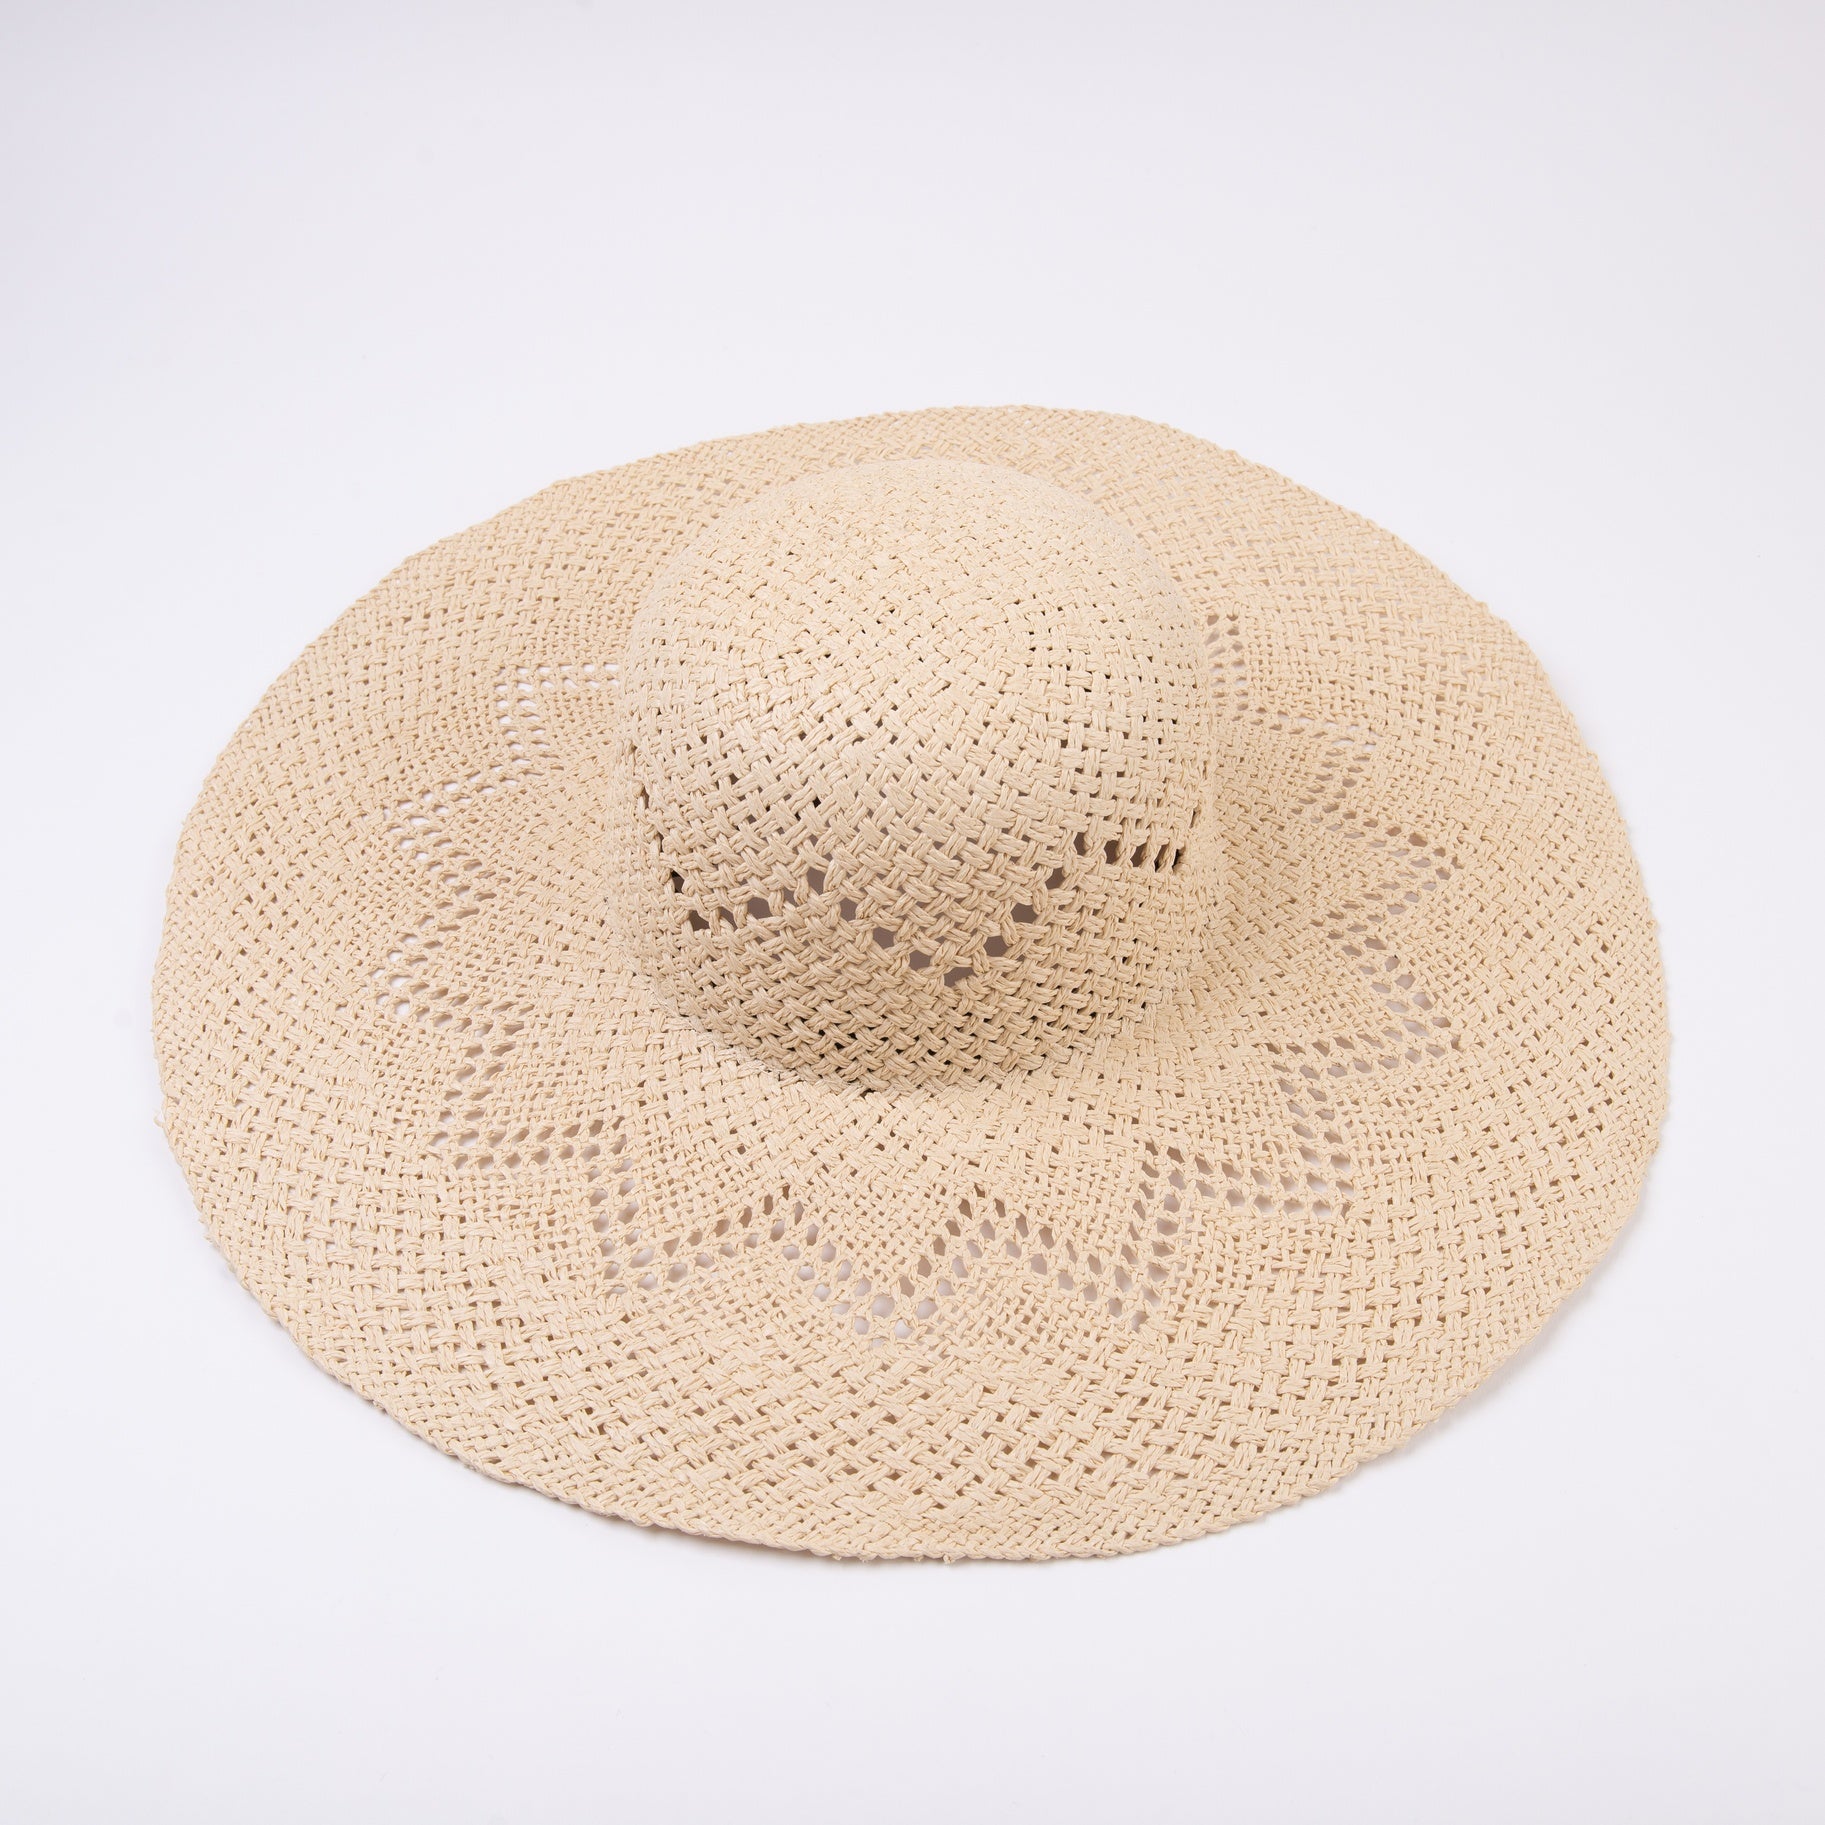 The Aruba Natural Straw Hat